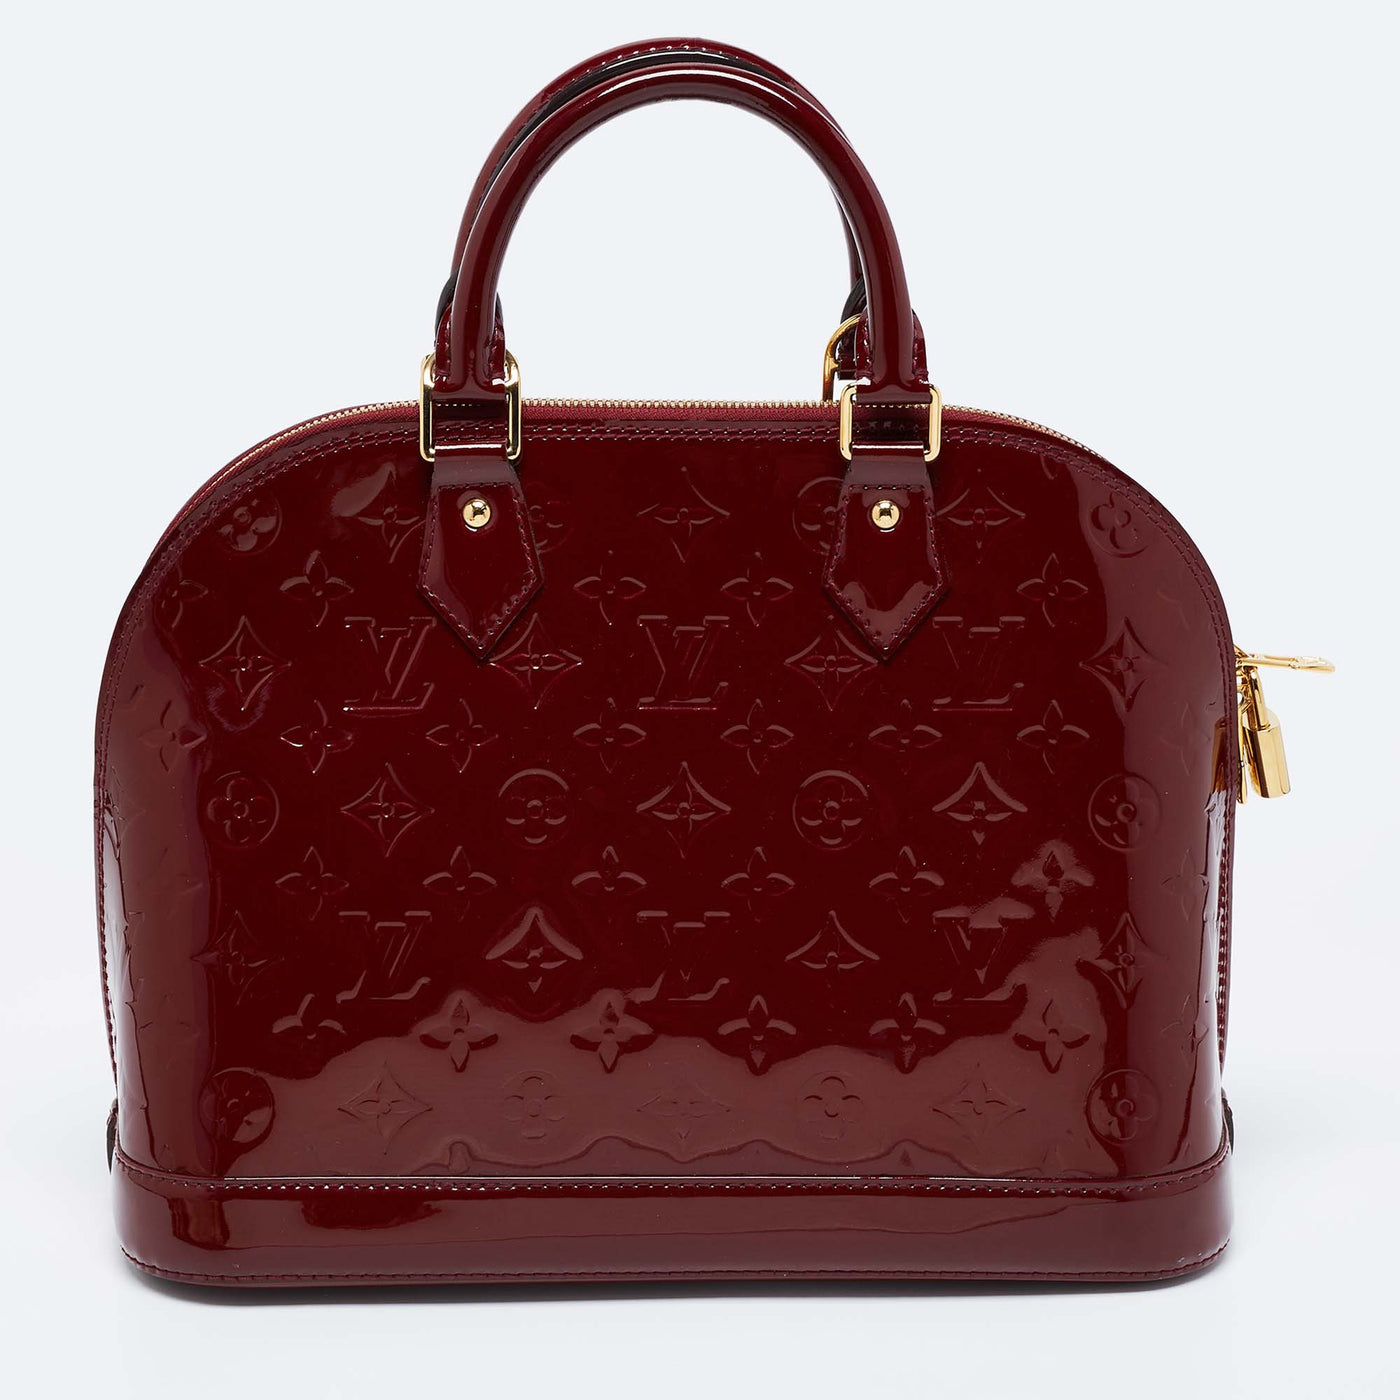 Louis Vuitton Alma: A Quintessential Piece Of Handbag History